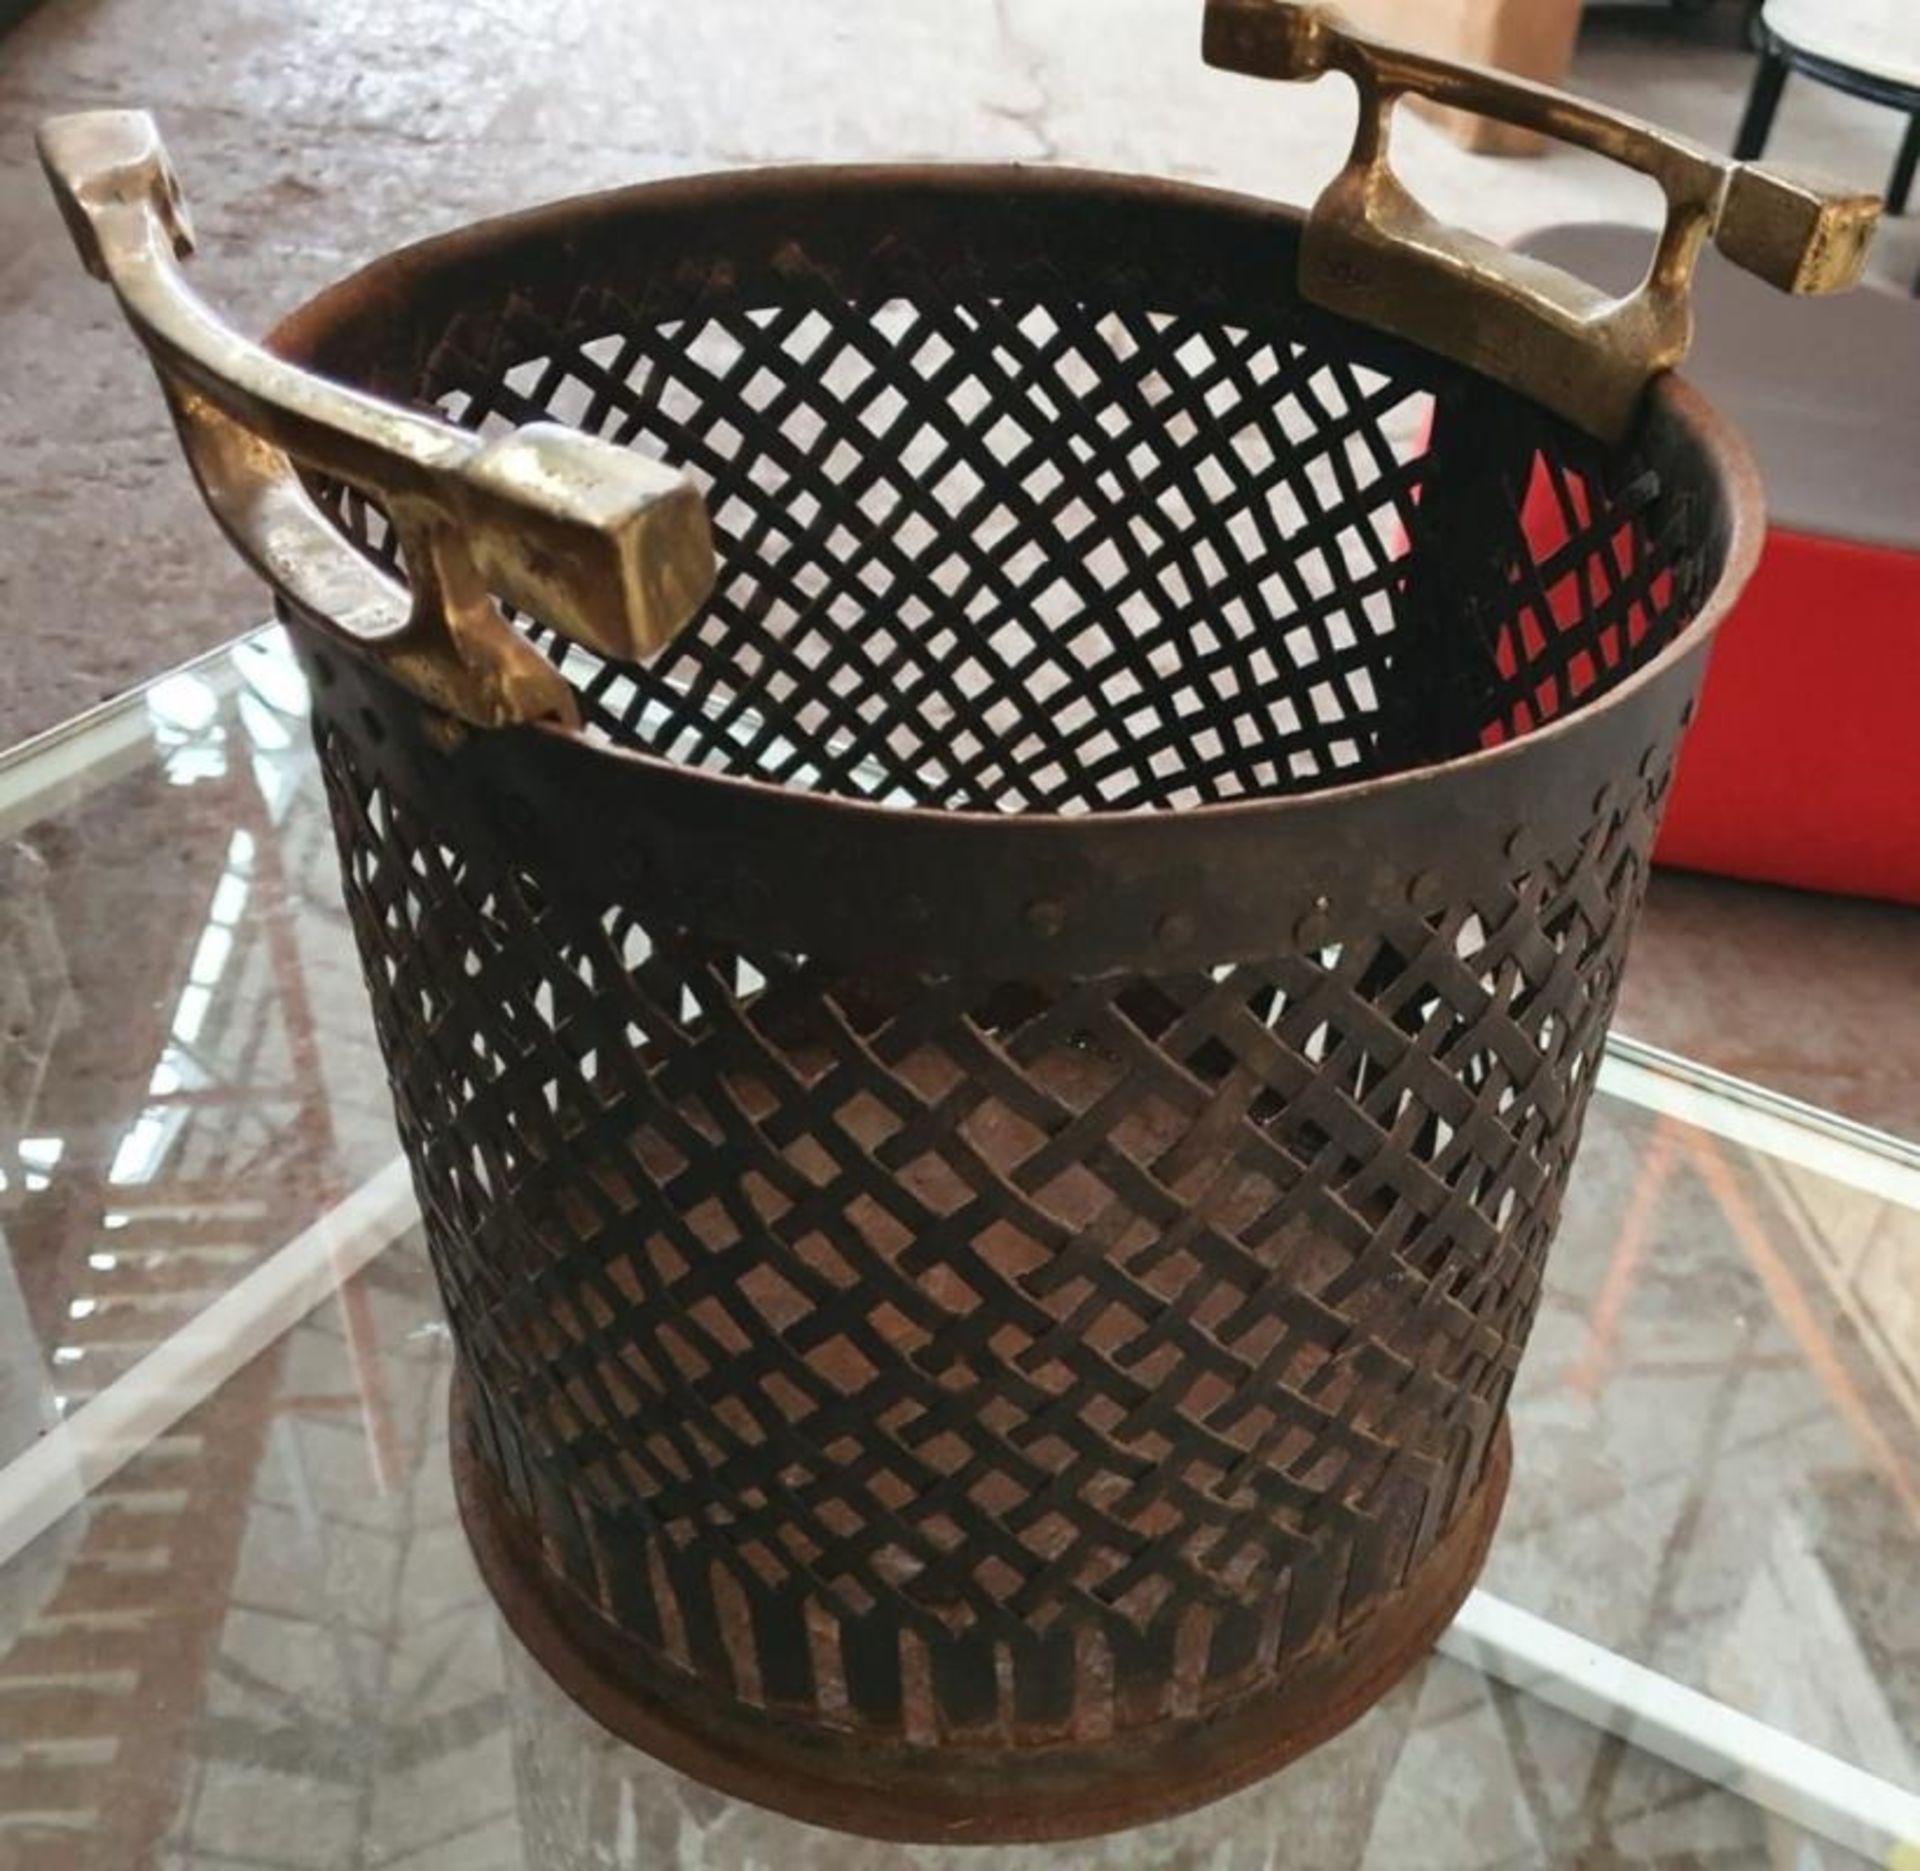 1 x Coal Basket Featuring Metal Latticework - Recently Taken From A London City Centre Restaurant -